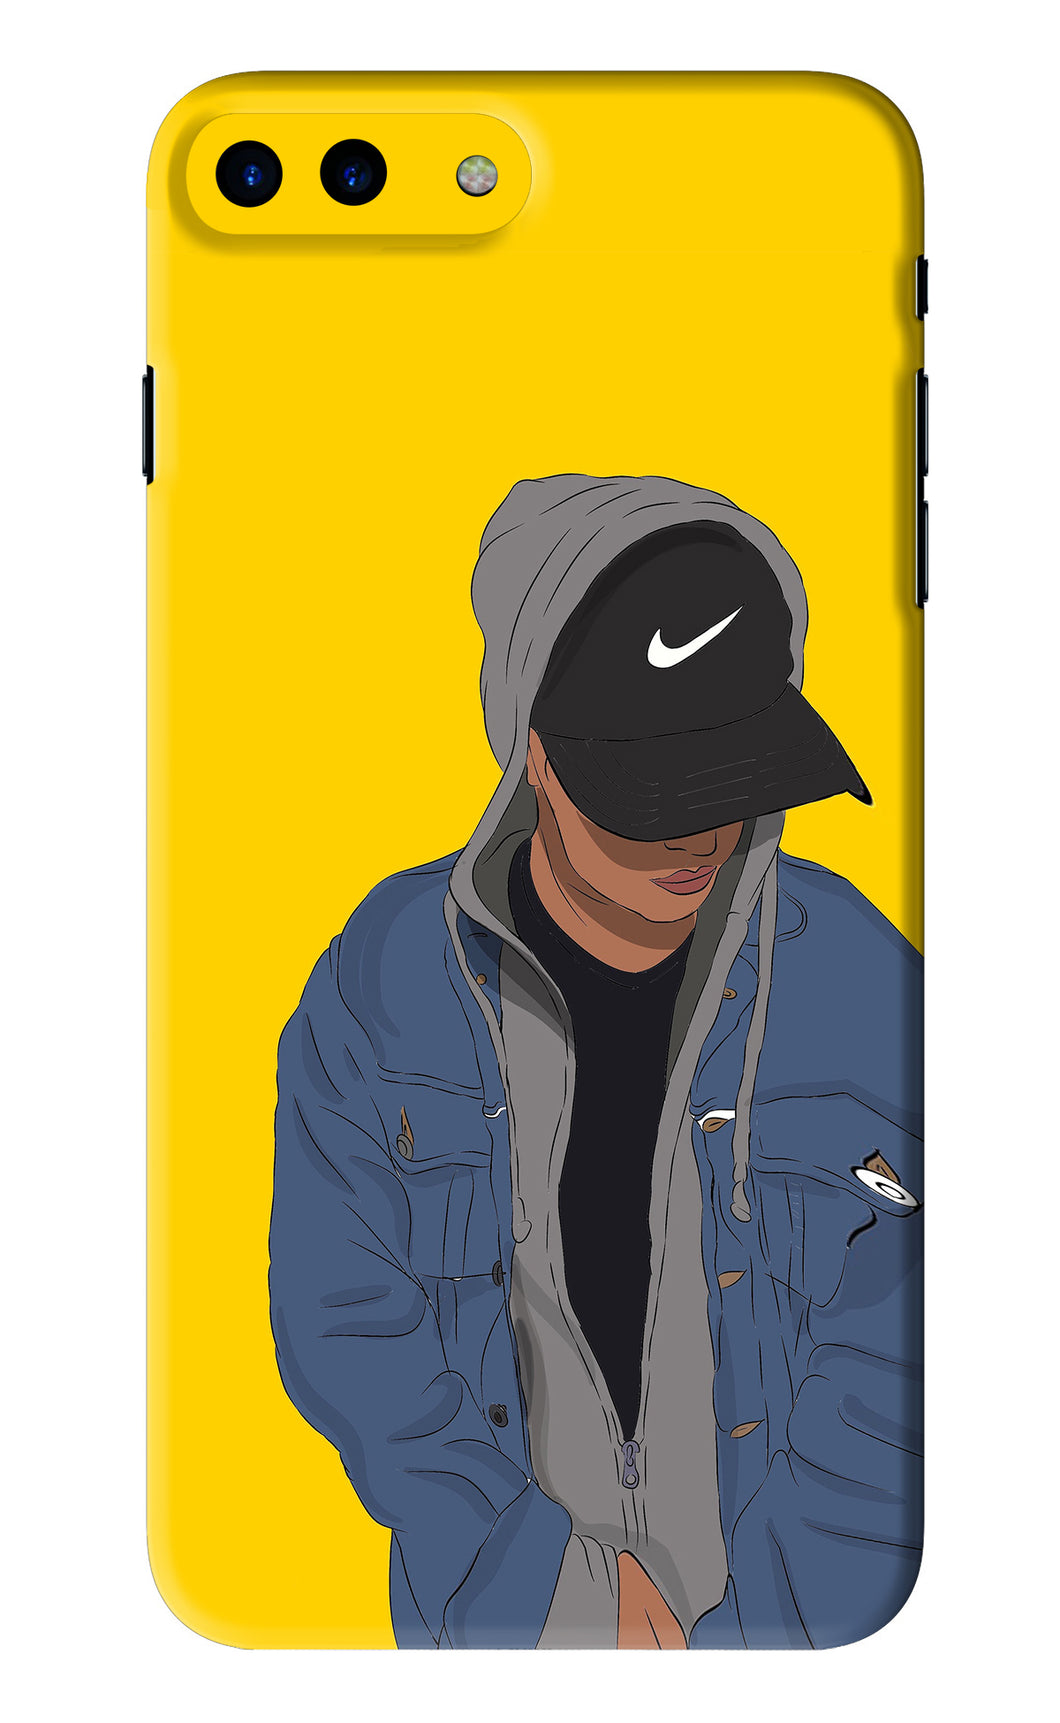 Nike Boy iPhone 7 Plus Back Skin Wrap